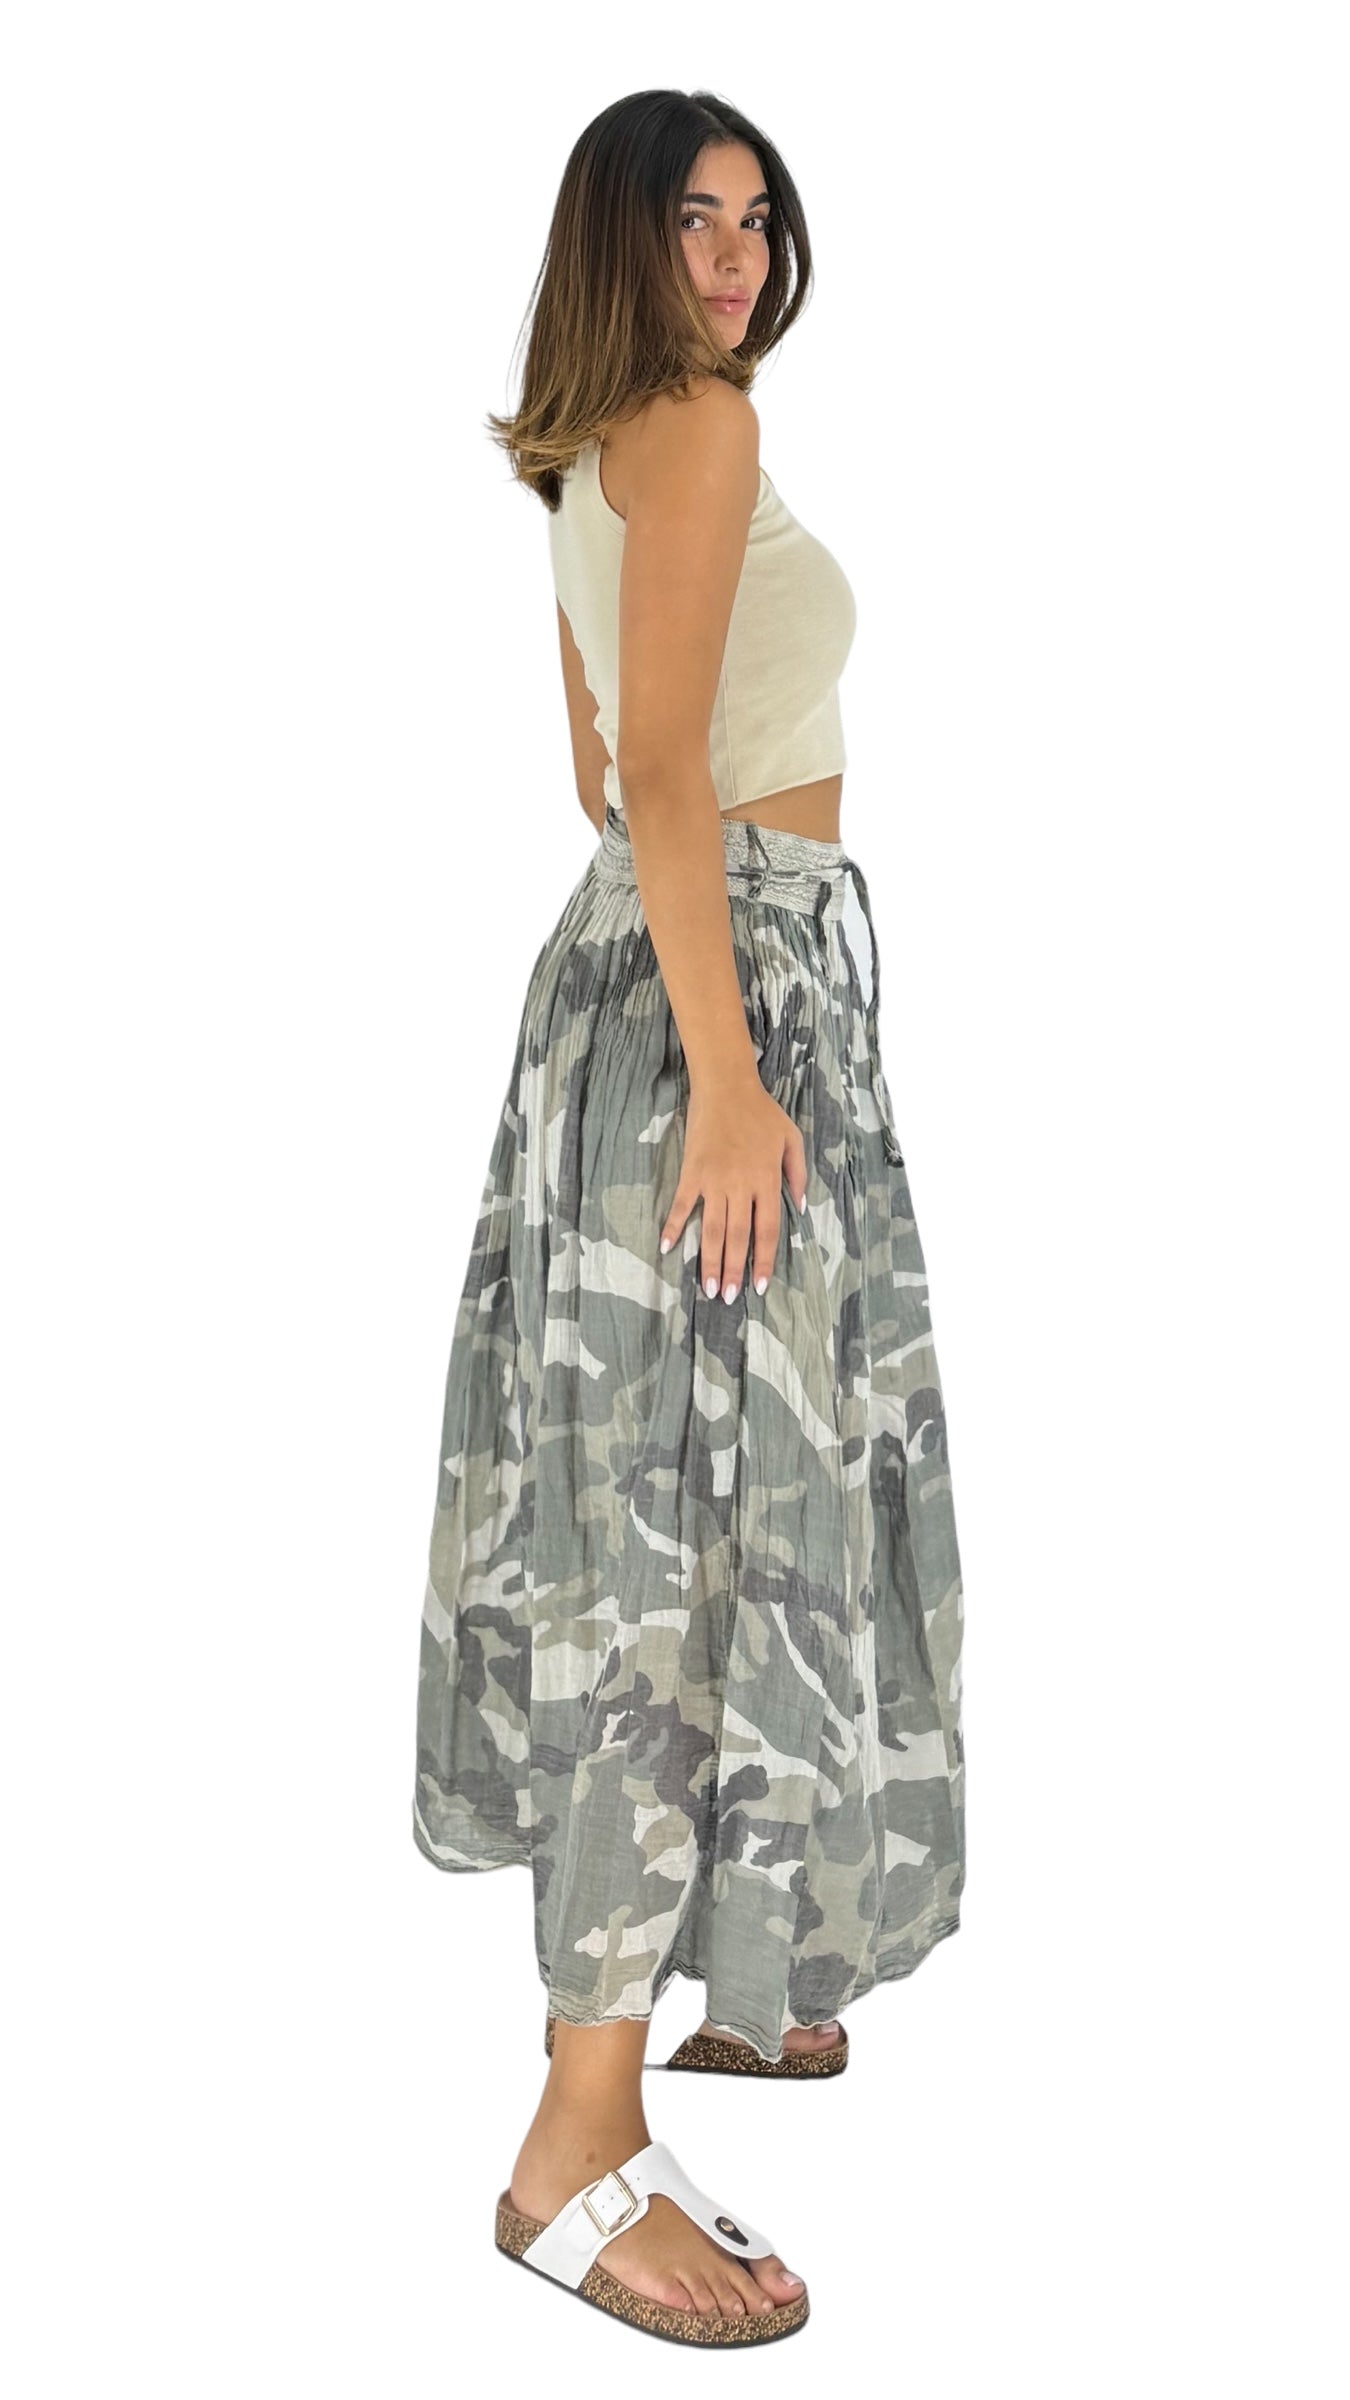 Rima camouflage skirt